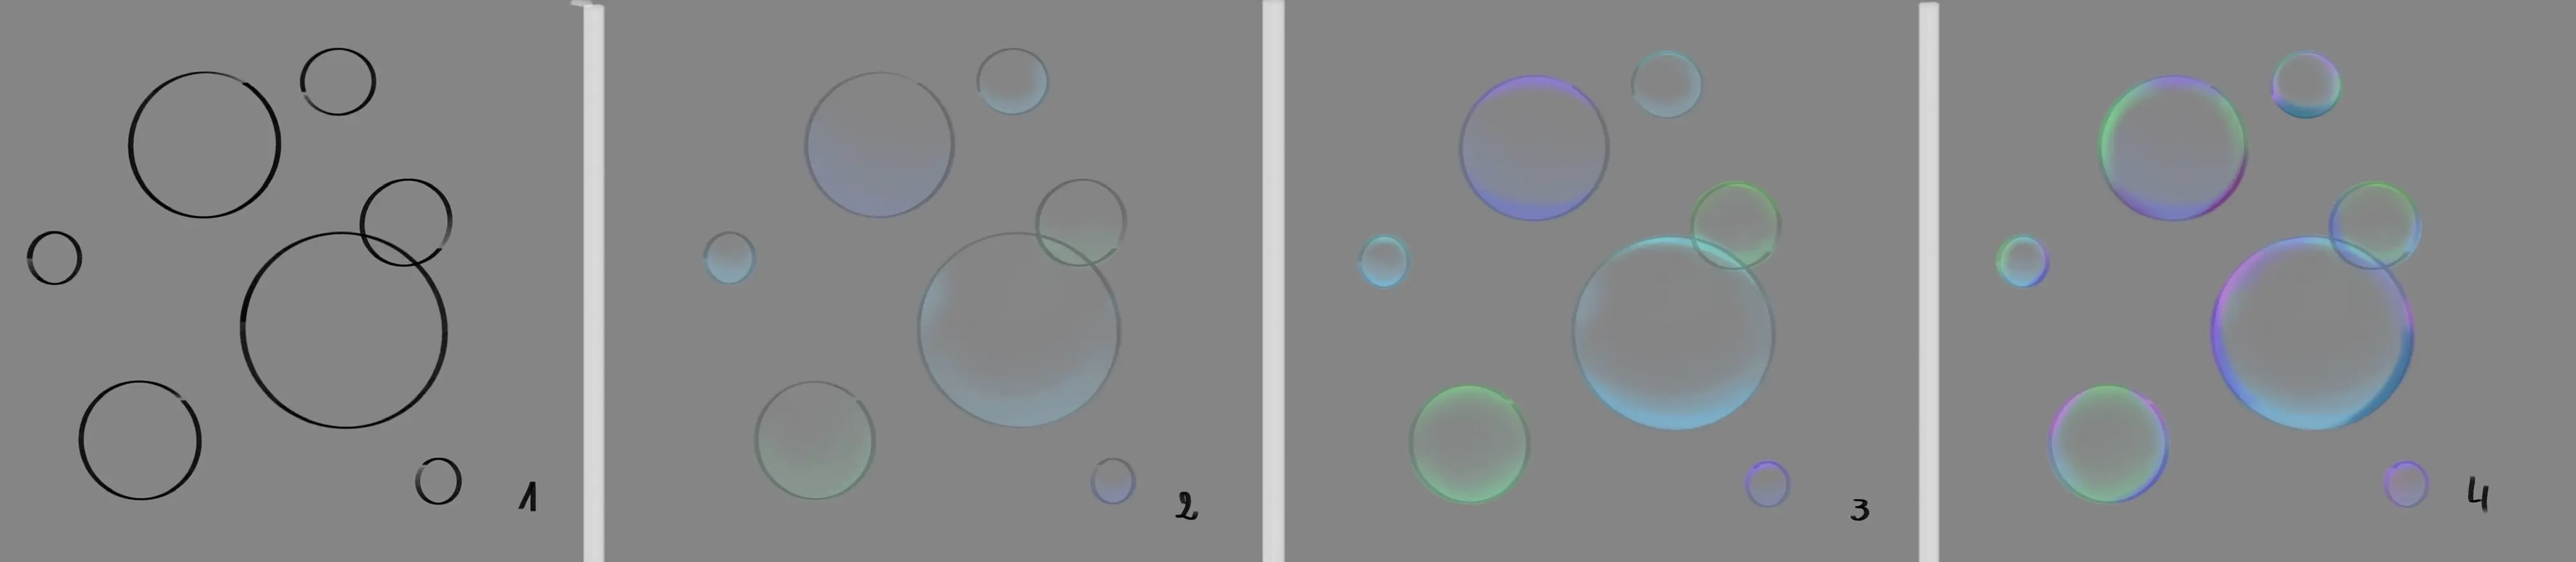 dessiner la base des bulles transparentes